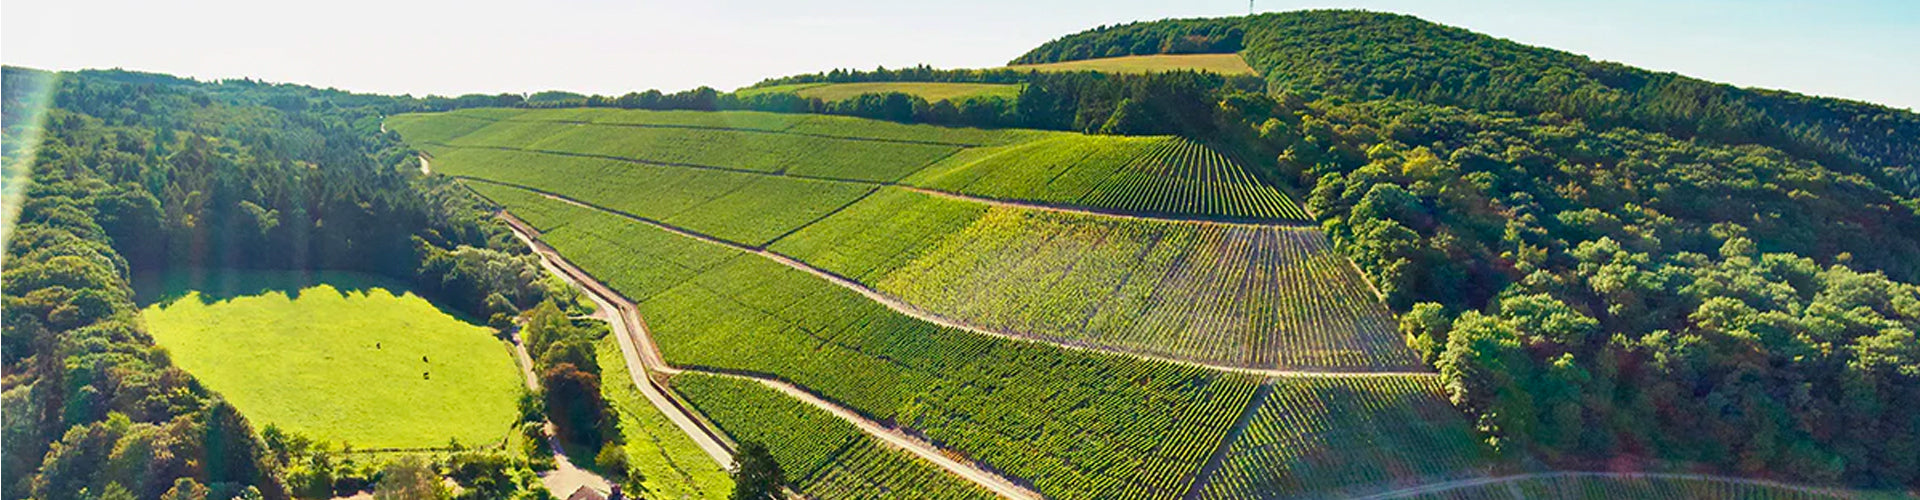 The Single Estate Vineyards of Maximin Grünhaus in Germany's Mosel Wine Region